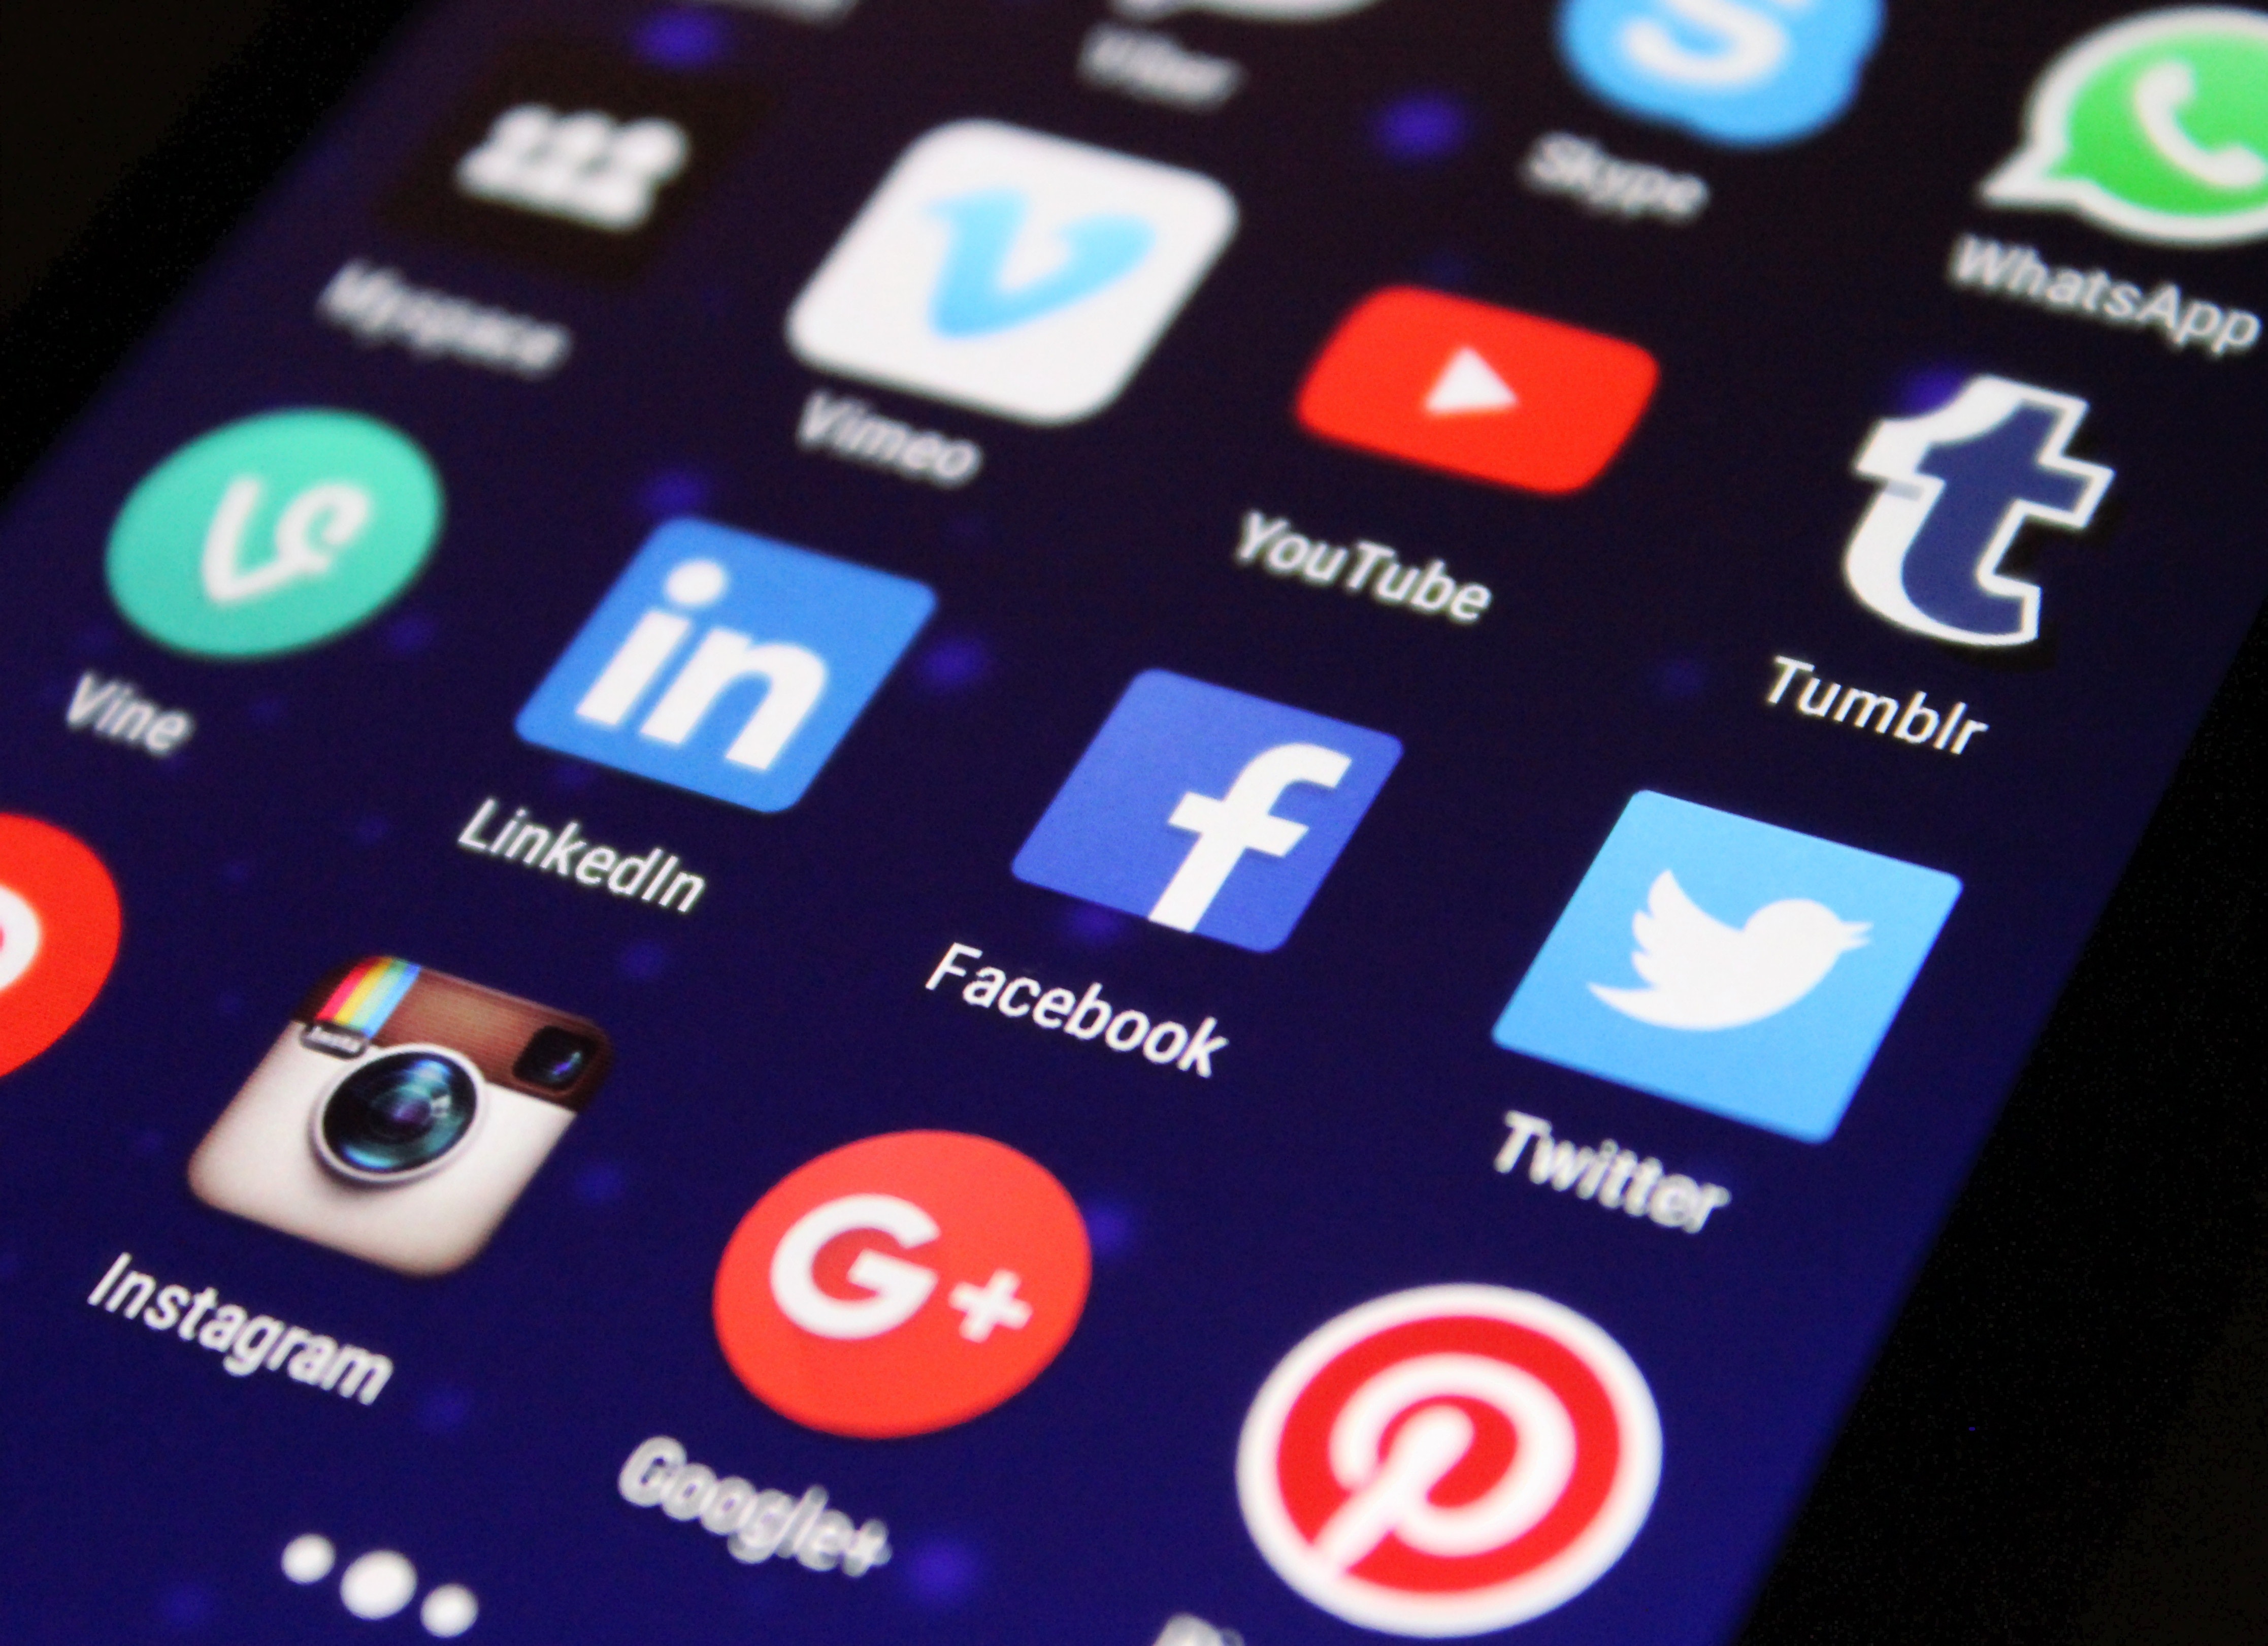 Closeup of smartphone showing social media app icons.